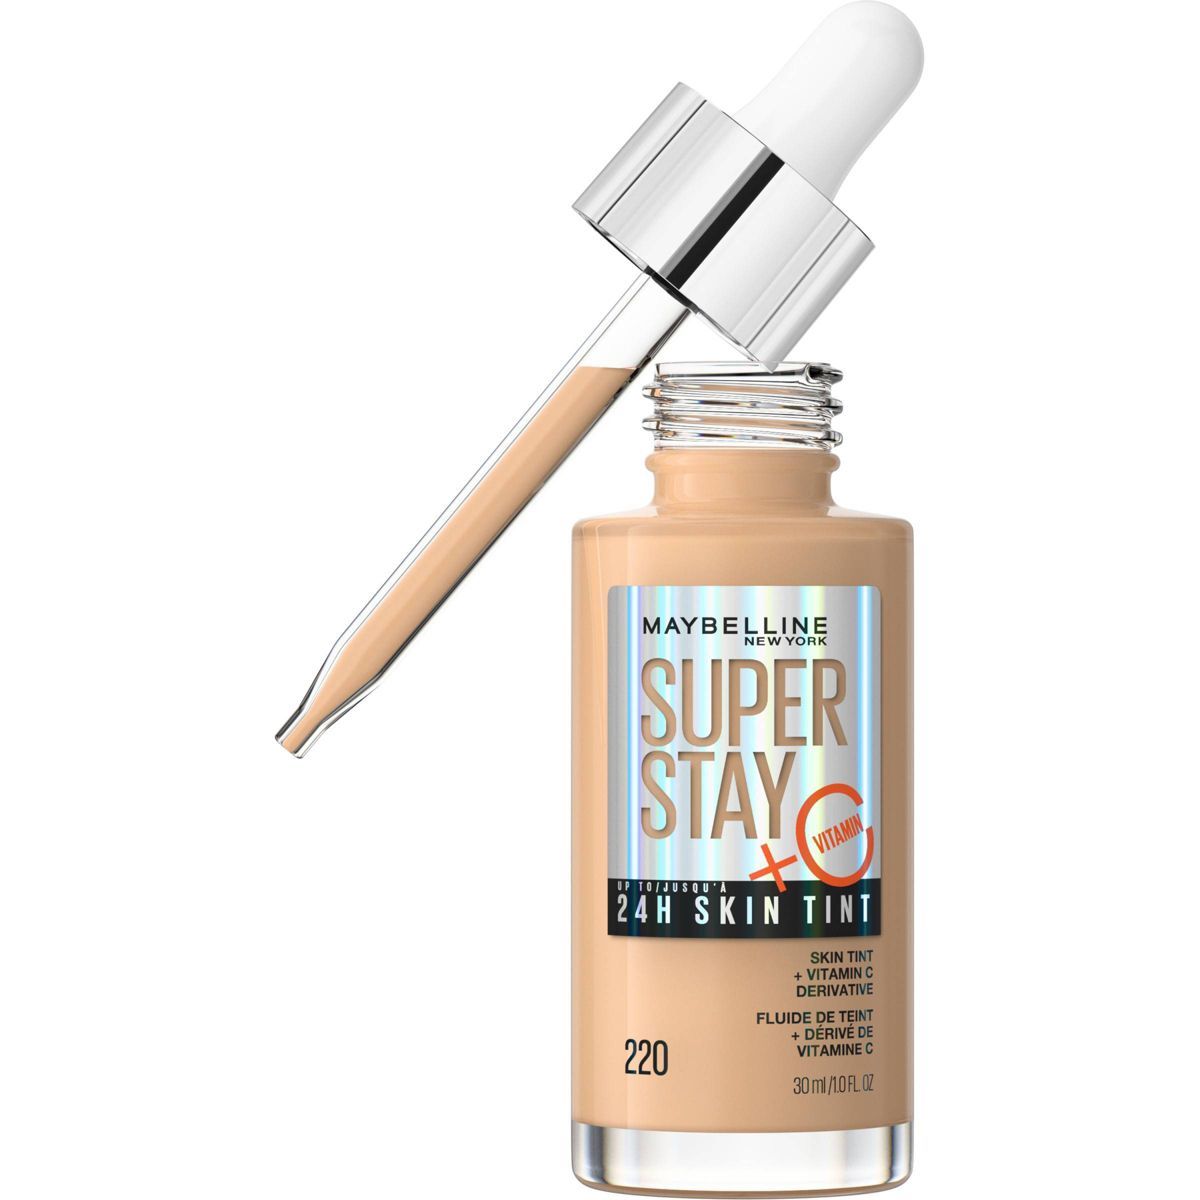 Maybelline Super Stay 24HR Skin Tint Foundation with Vitamin C - 1 fl oz | Target